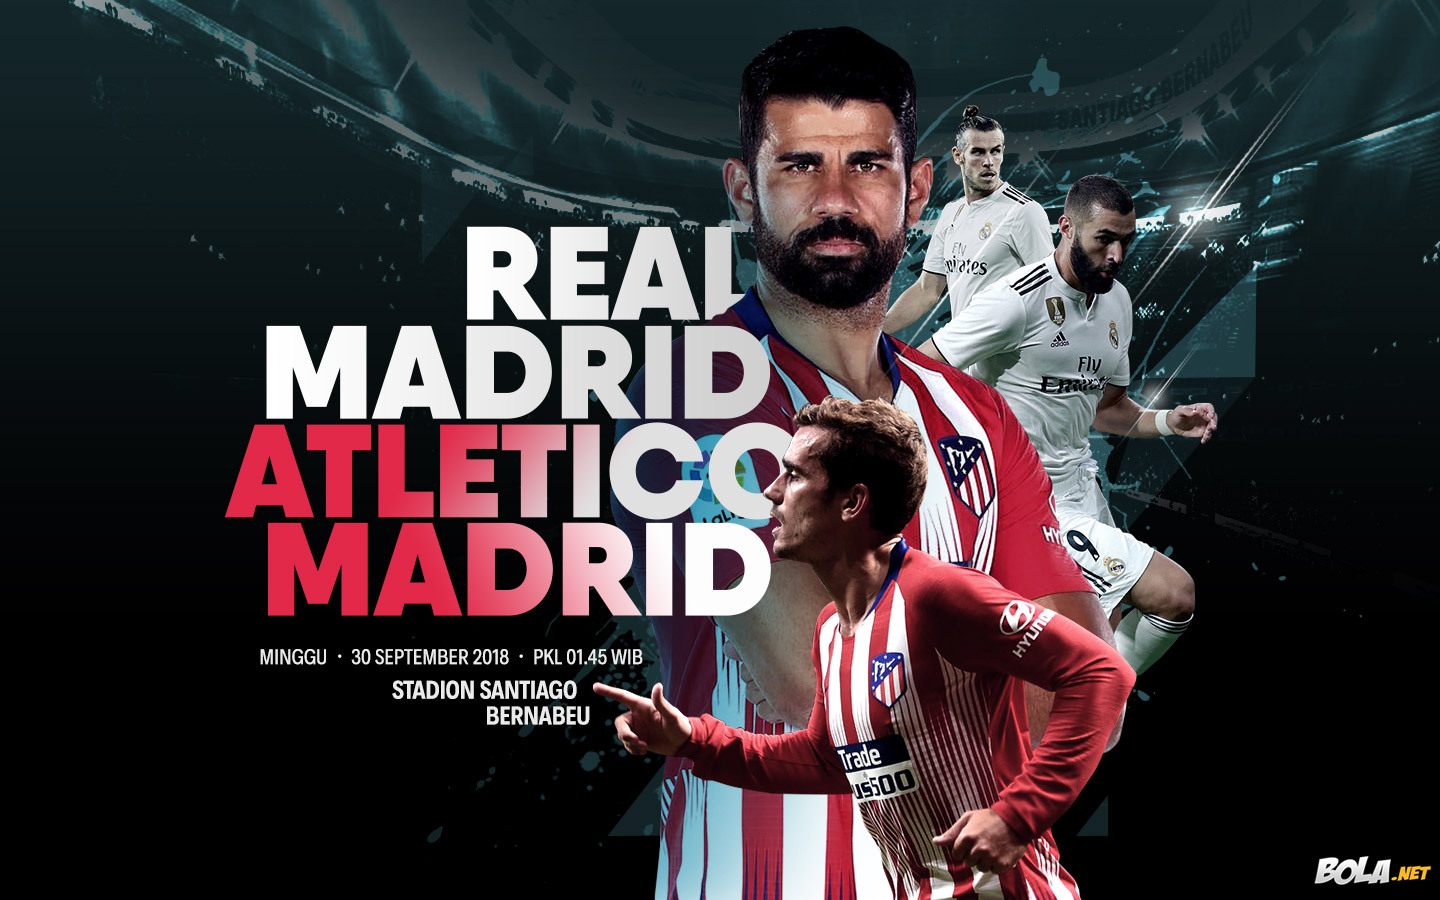 Deskripsi : Wallpaper Real Madrid Vs Atletico Madrid, size: 1440x900